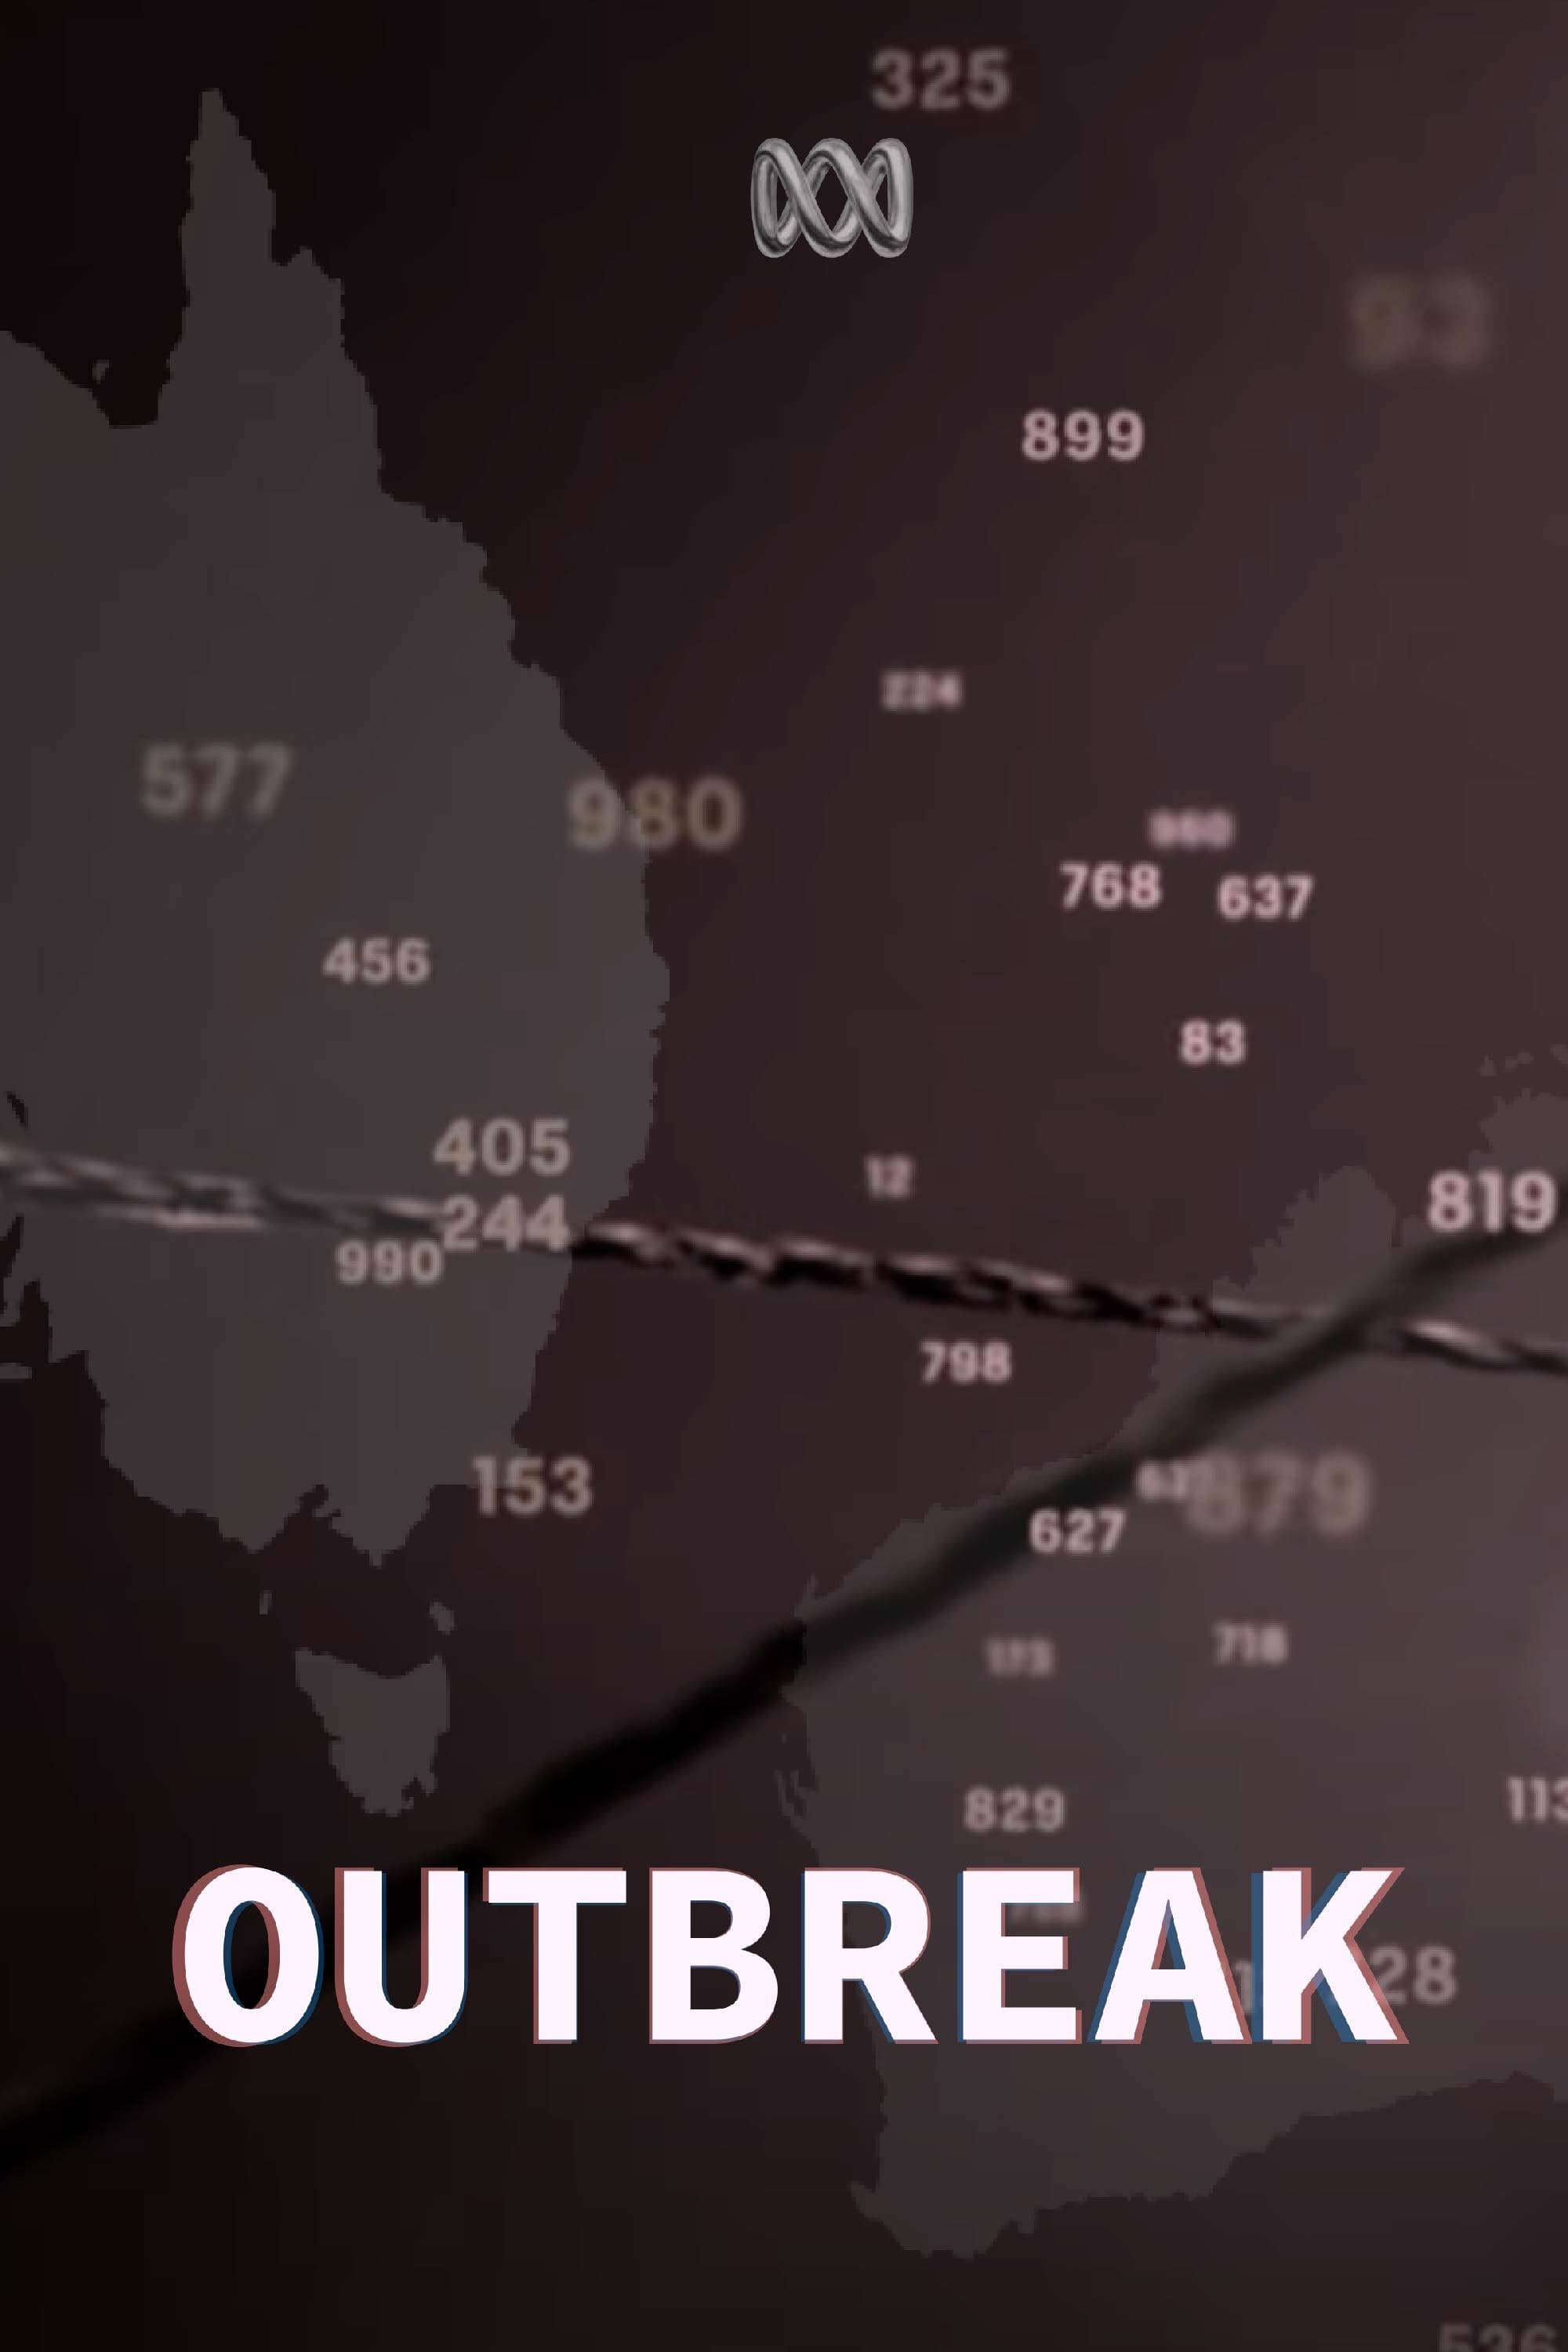 Outbreak: How Australia Lost Control